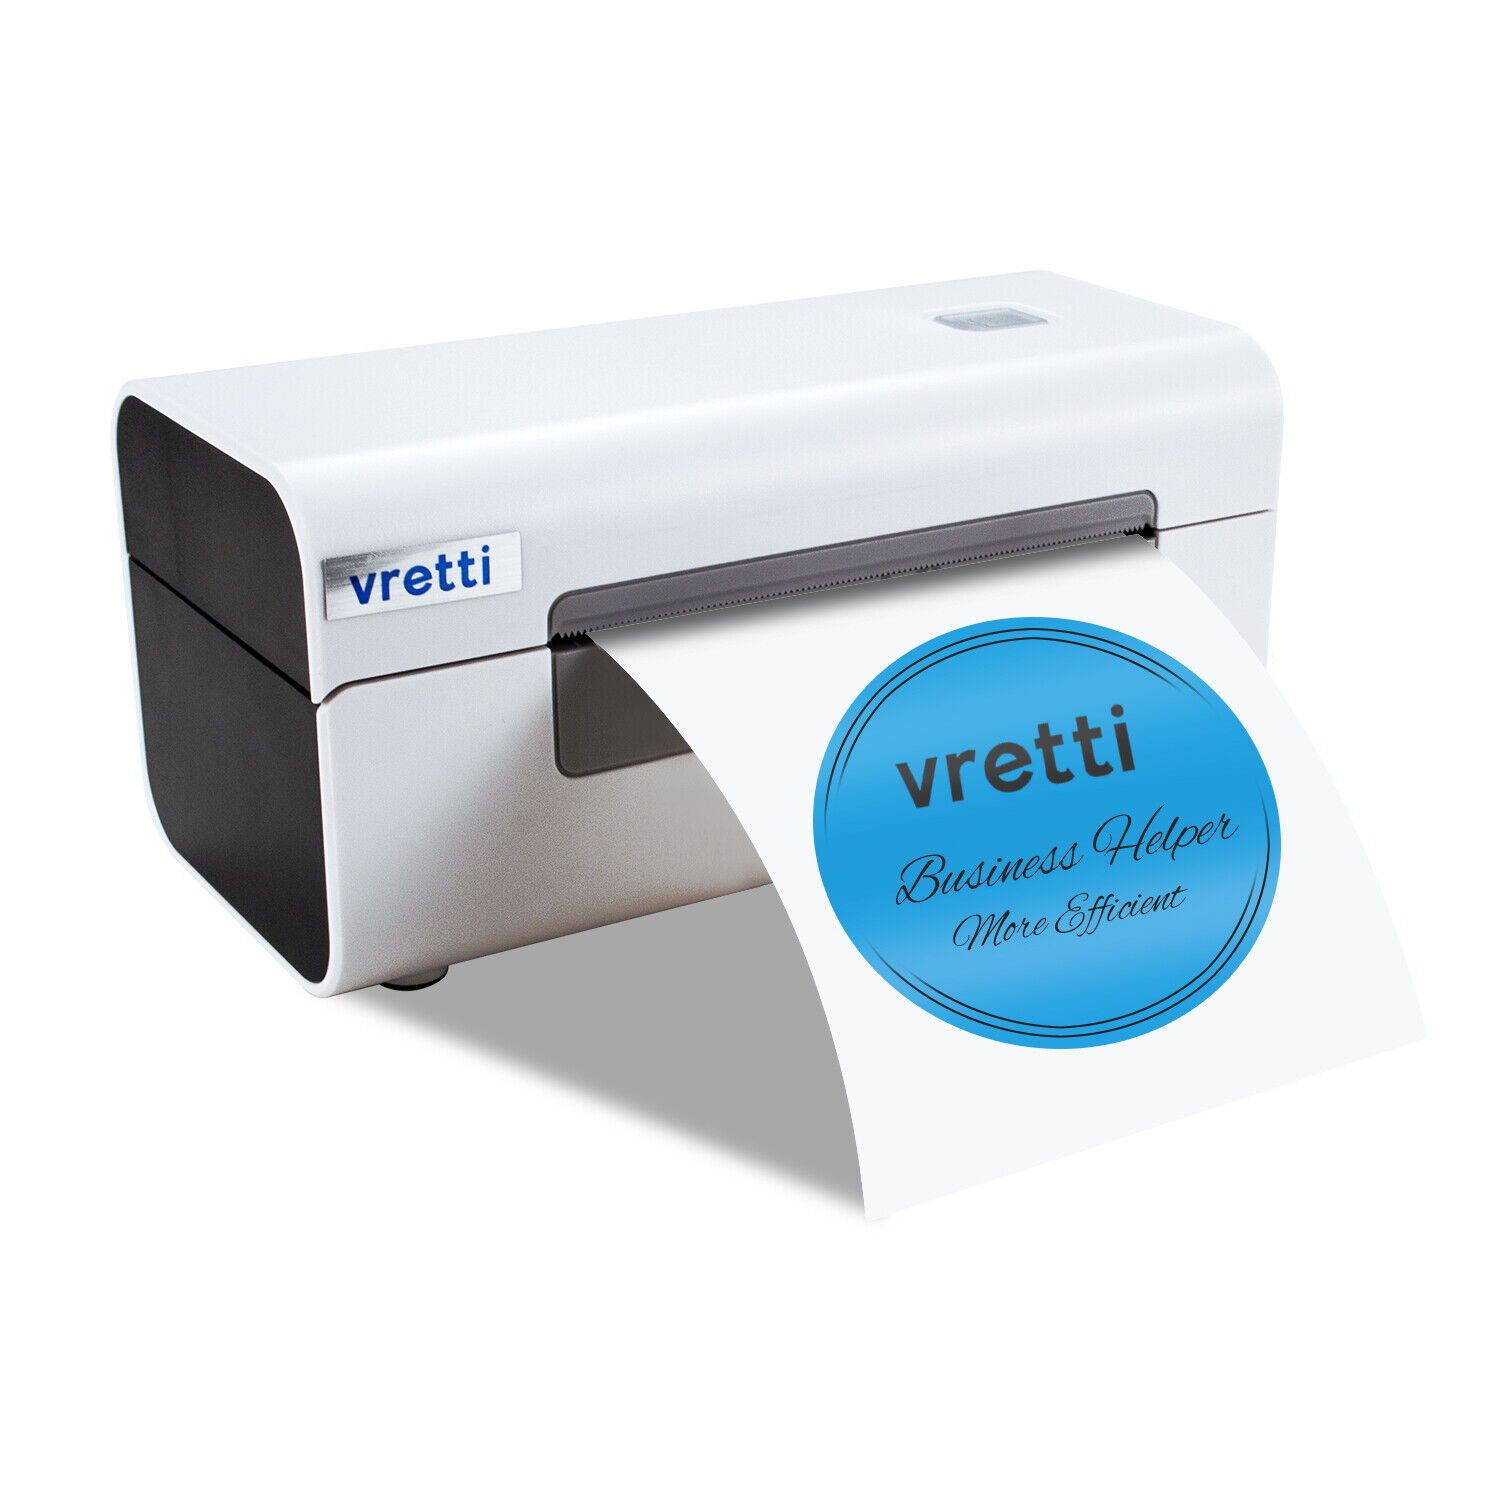 VRETTI Thermal Label Printer 4x6 Cheap Shipping Label Printer For Windows & Mac 